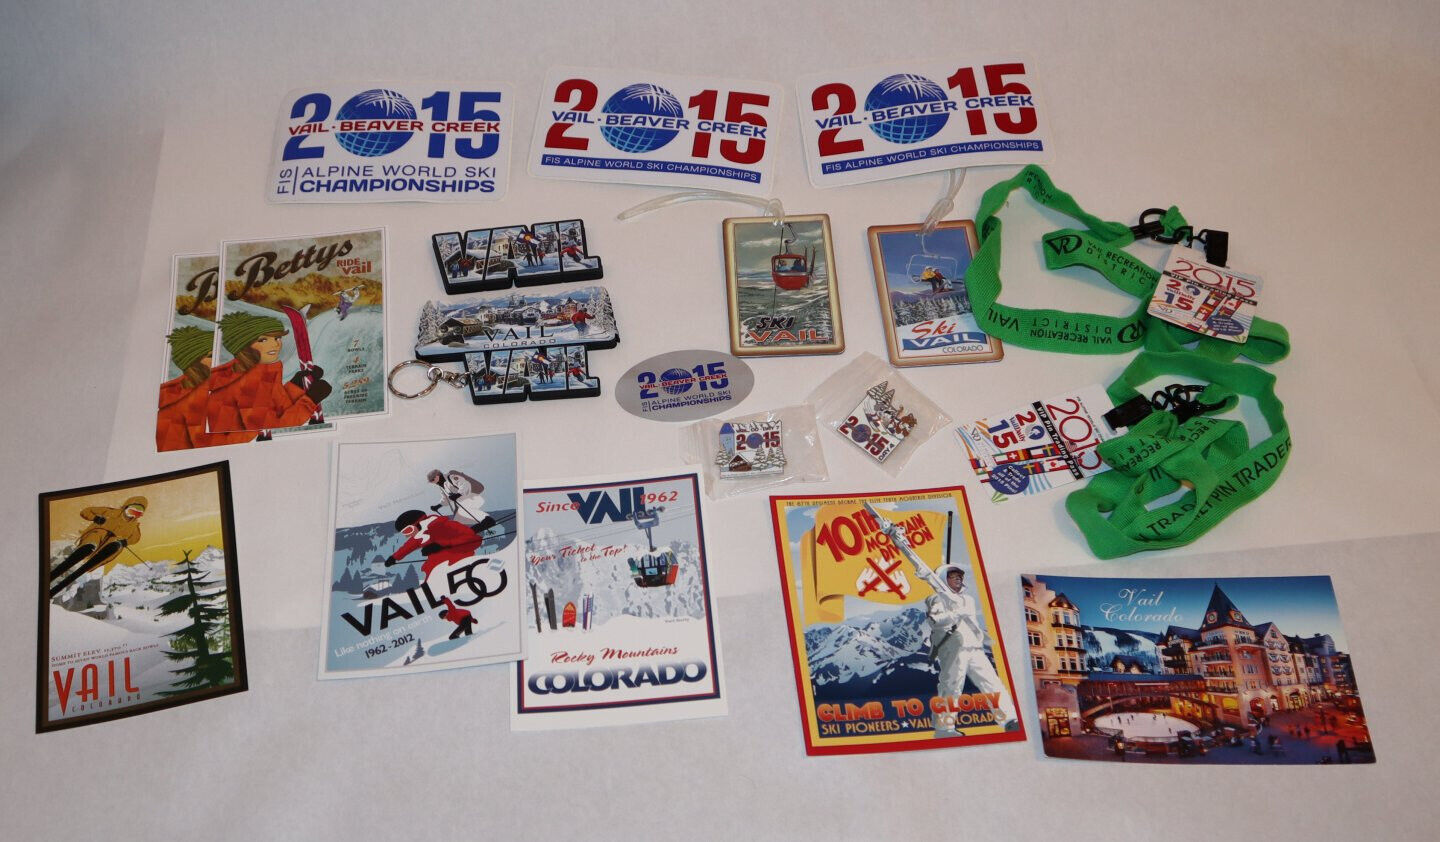 Vail Colorado 2015Alpine World Ski Championships  pin VIP pass stickers etc lot